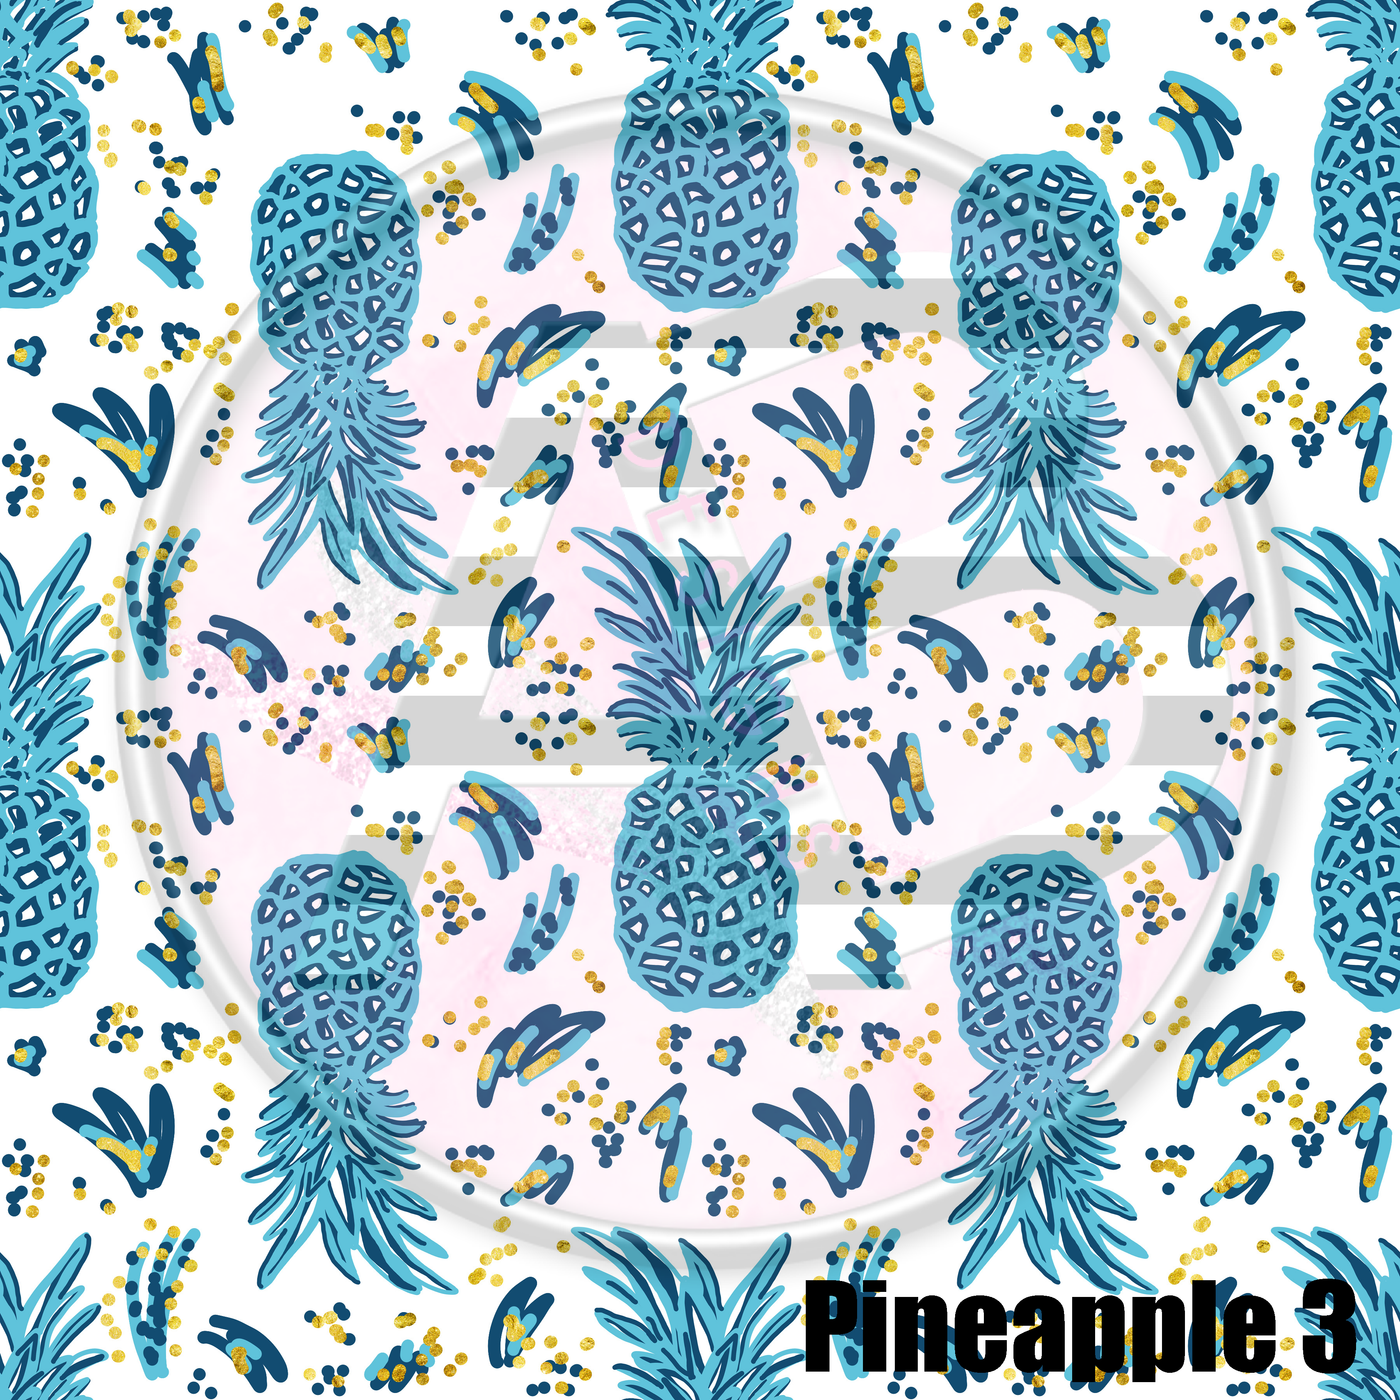 Adhesive Patterned Vinyl - Pineapple 3